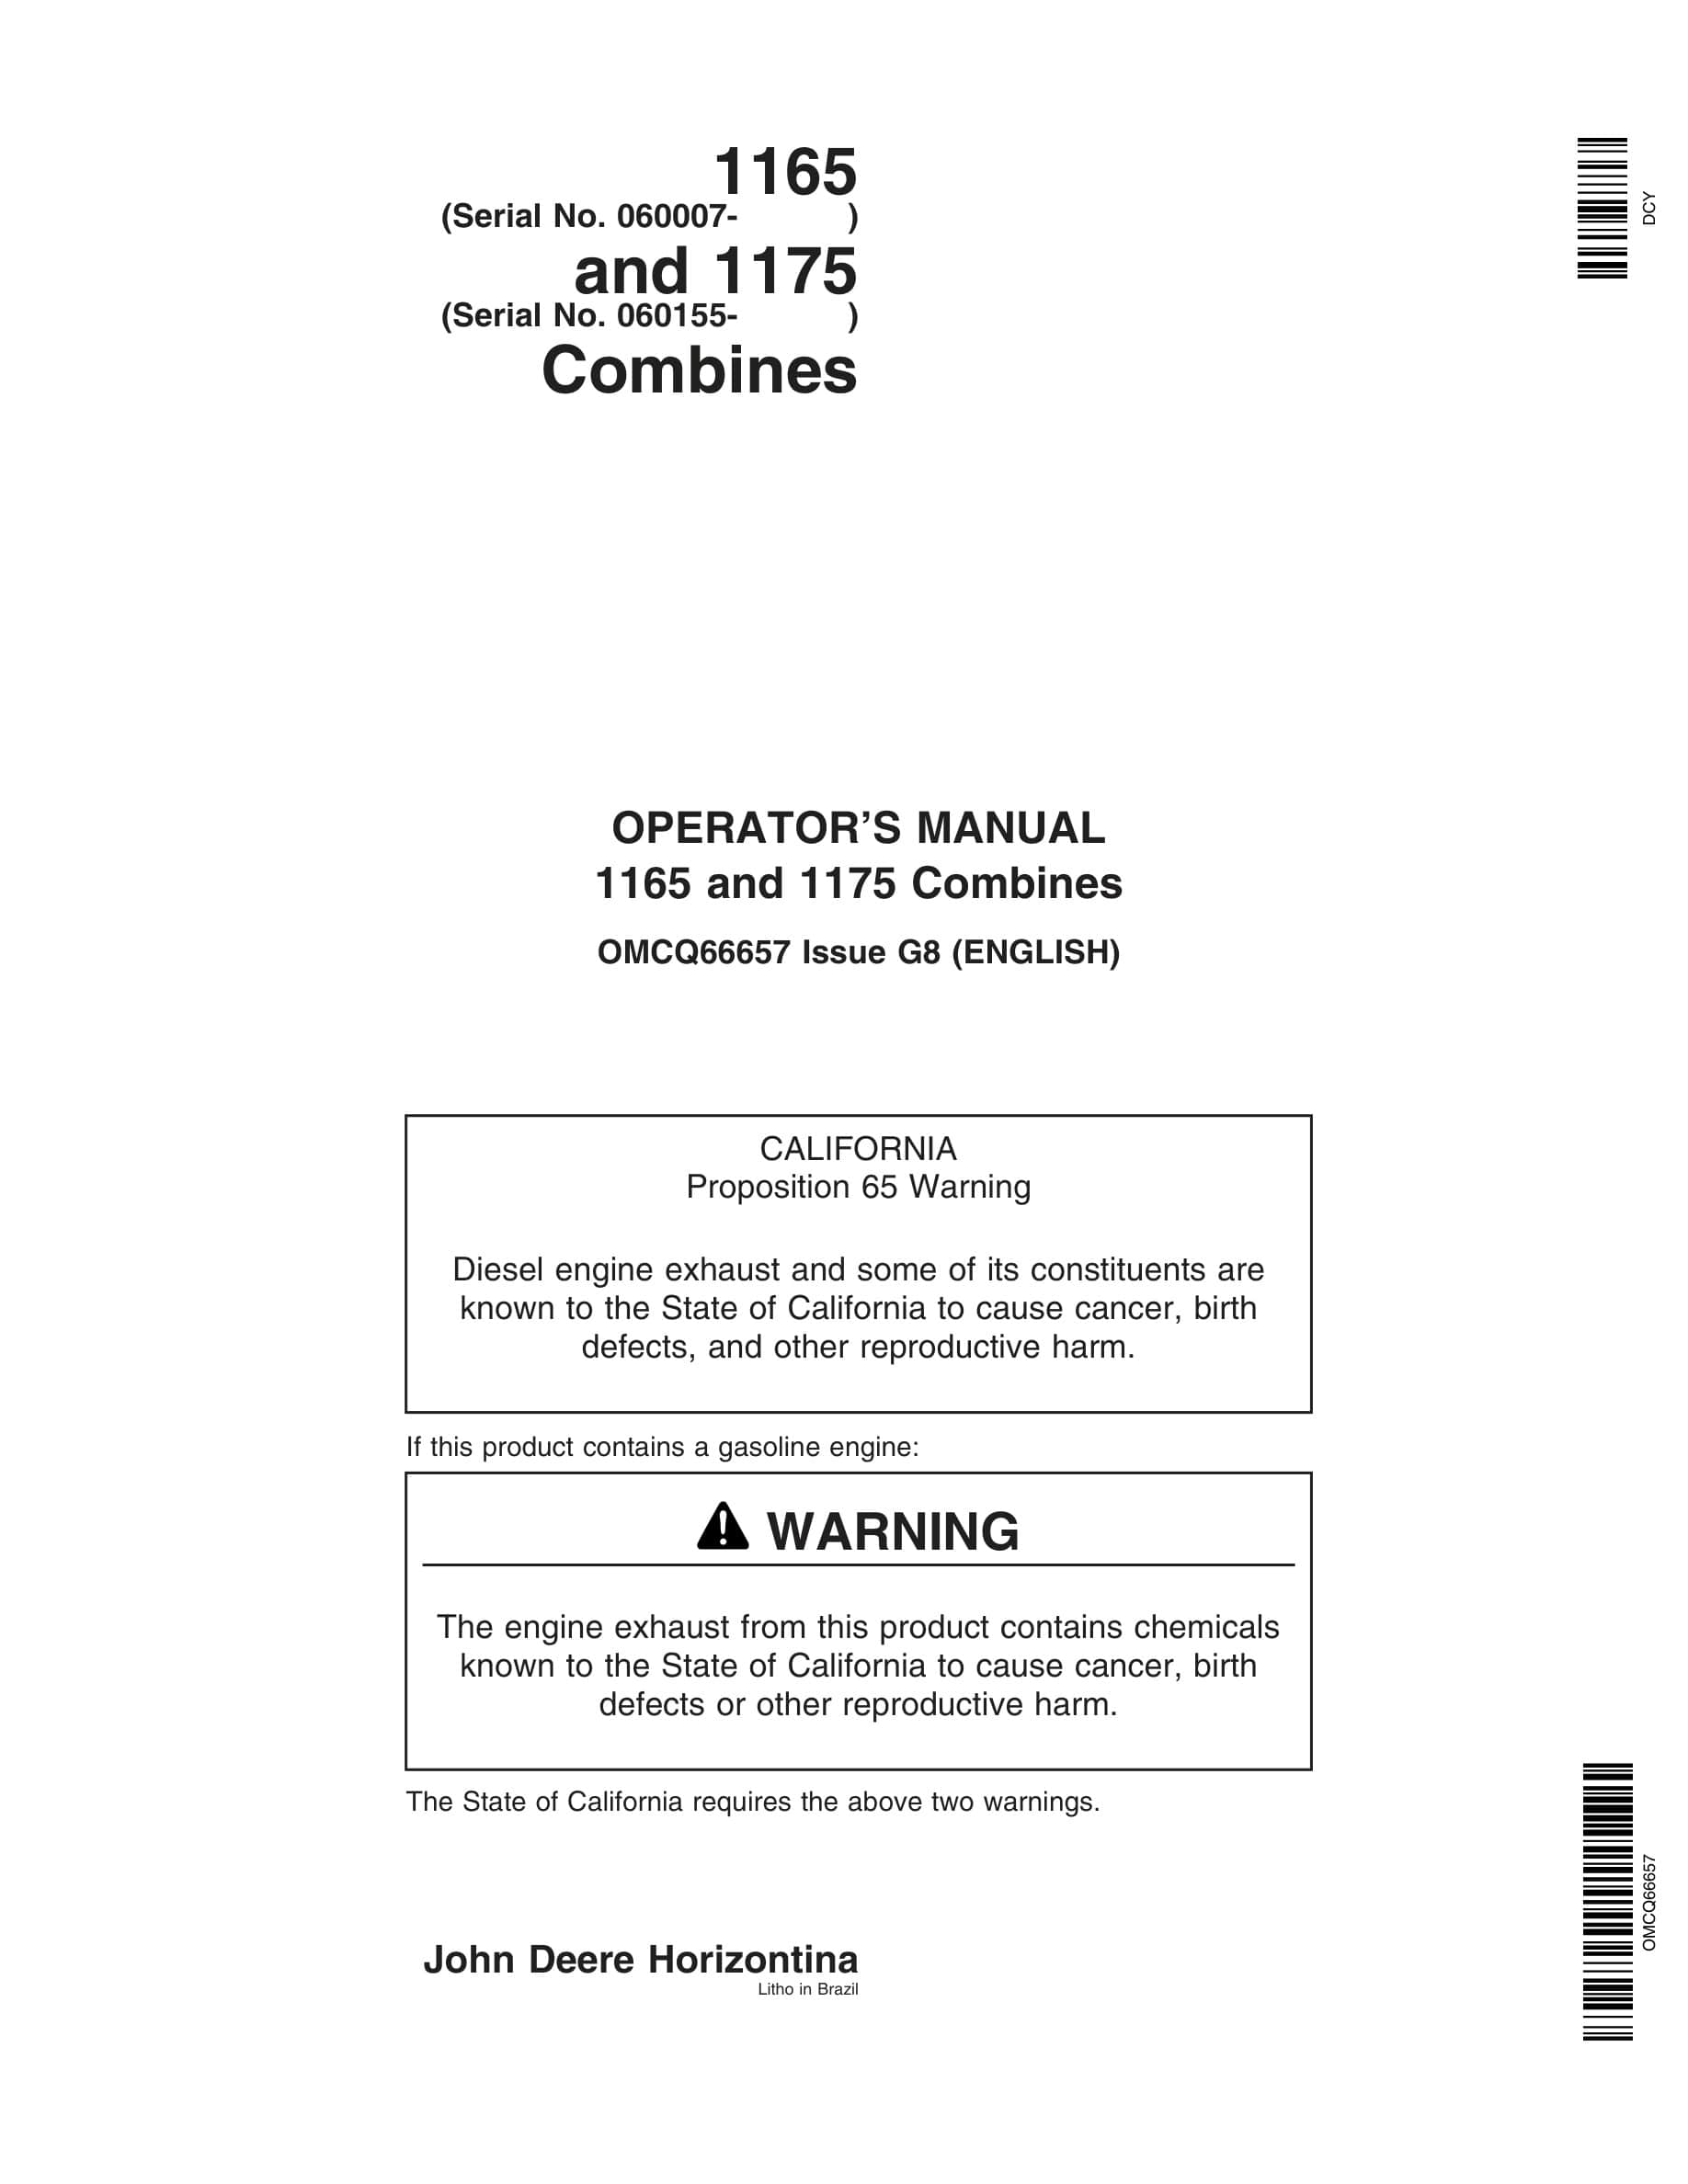 John Deere 1165 and 1175 Combine Operator Manual OMCQ66657-1